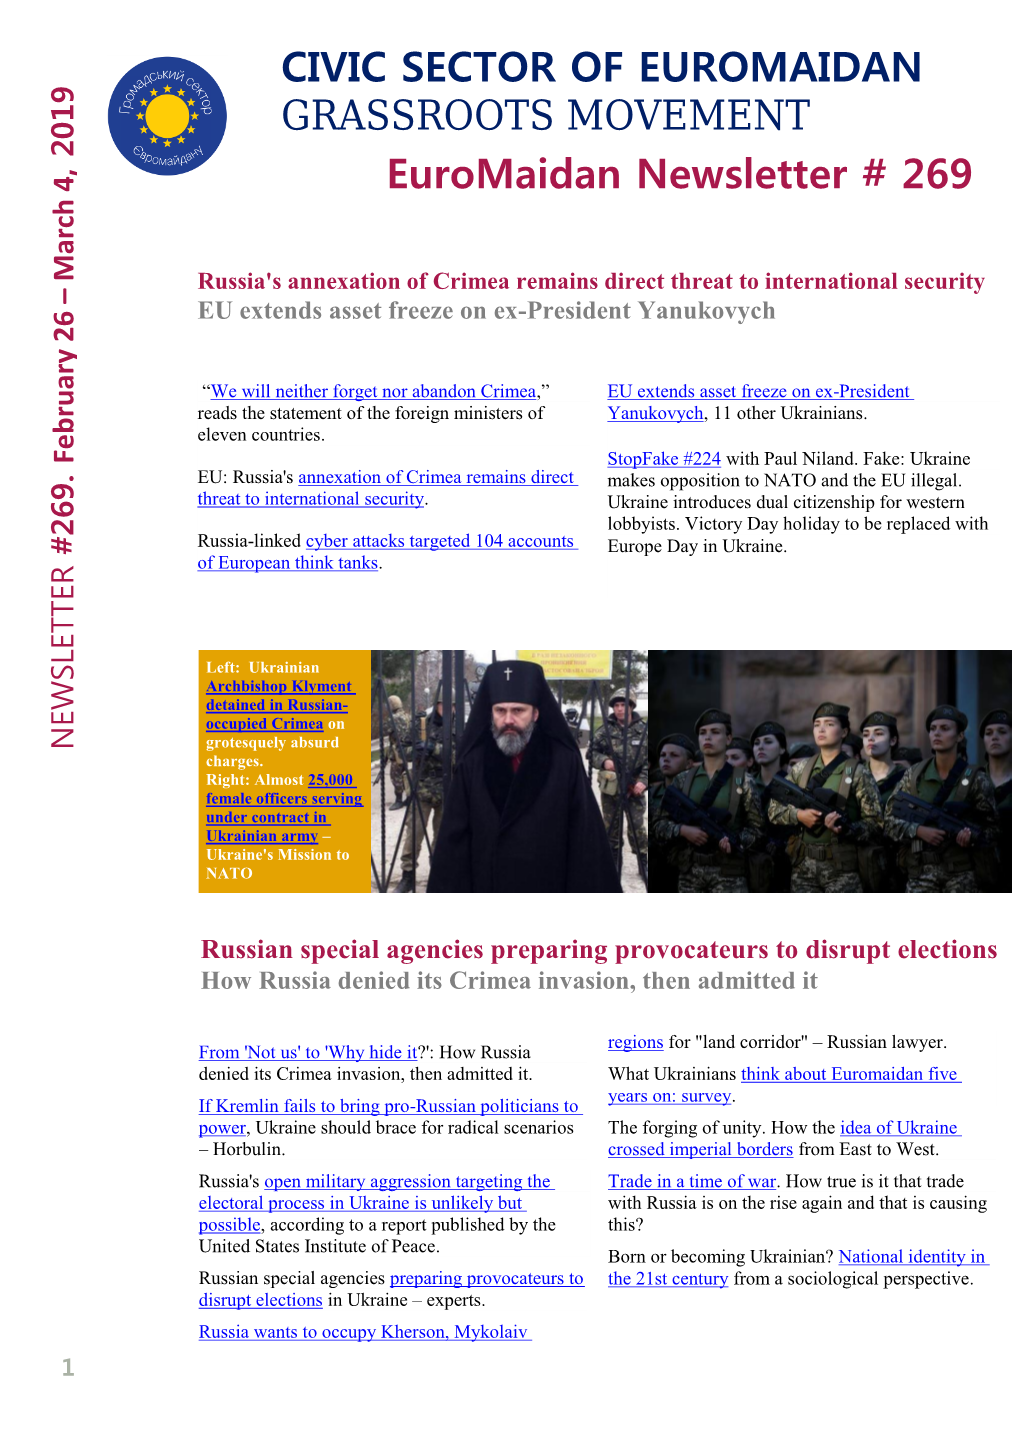 Euromaidan Newsletter # 269 CIVIC SECTOR of EUROMAIDAN GRASSROOTS MOVEMENT